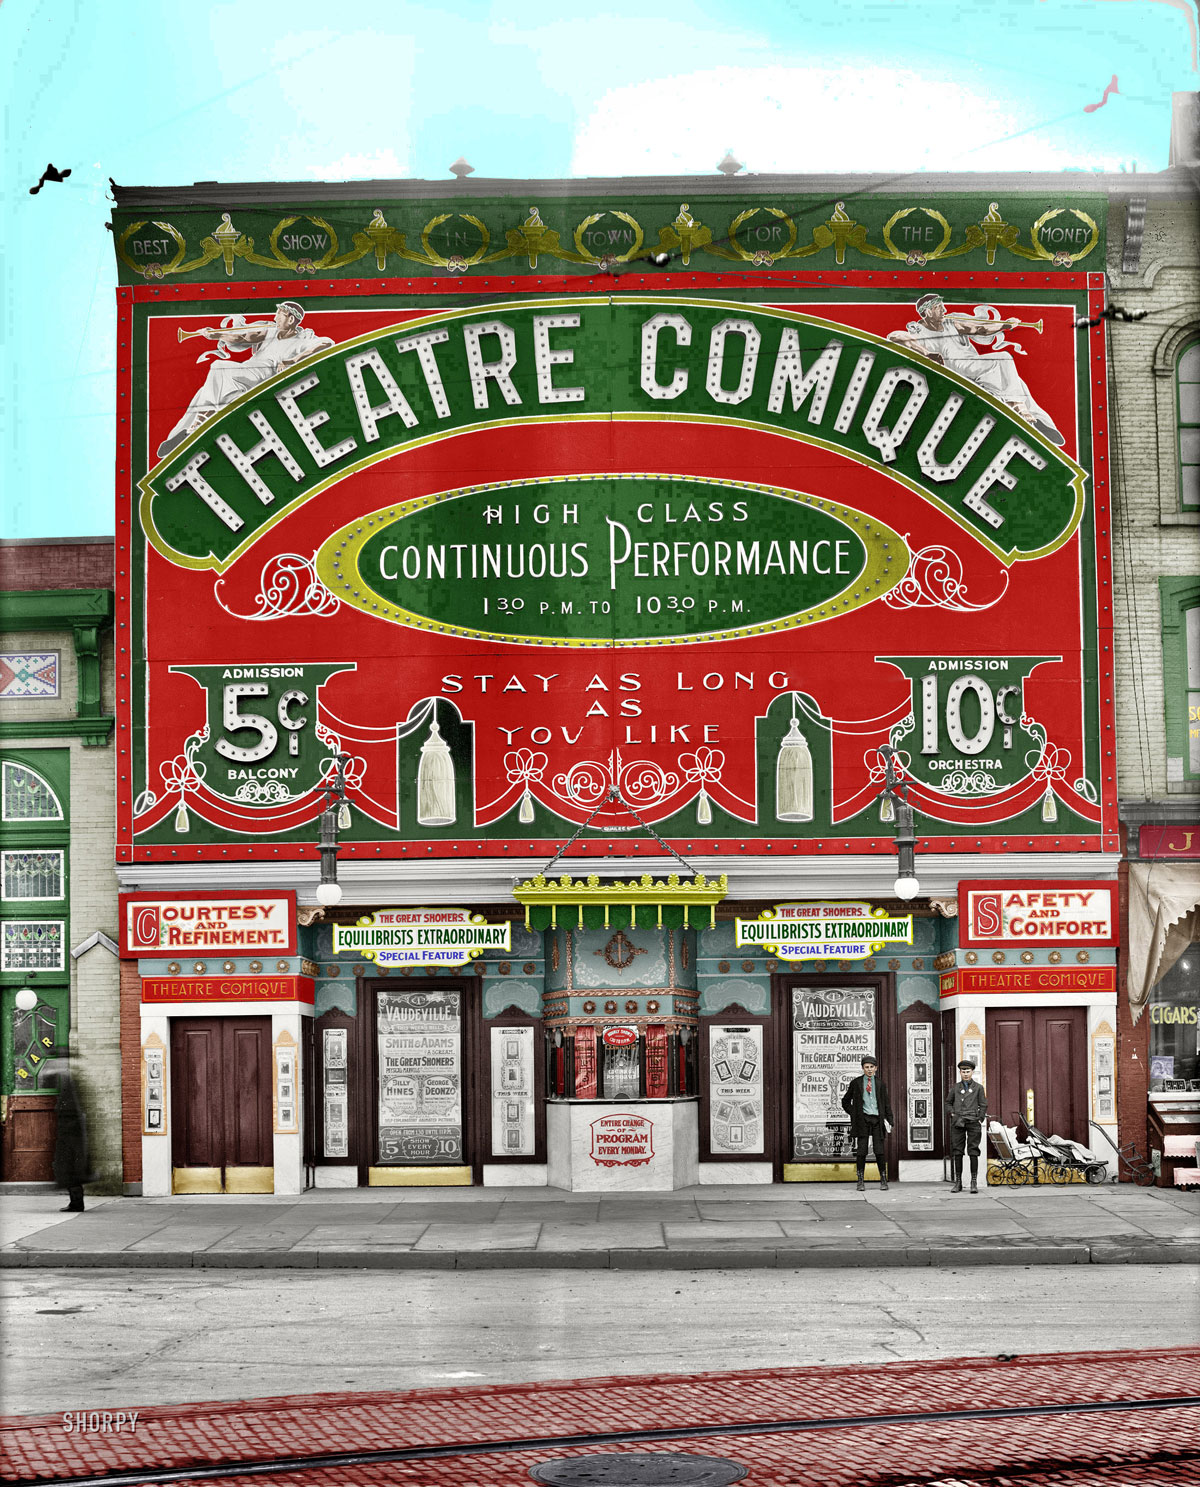 theatercomiquecolor